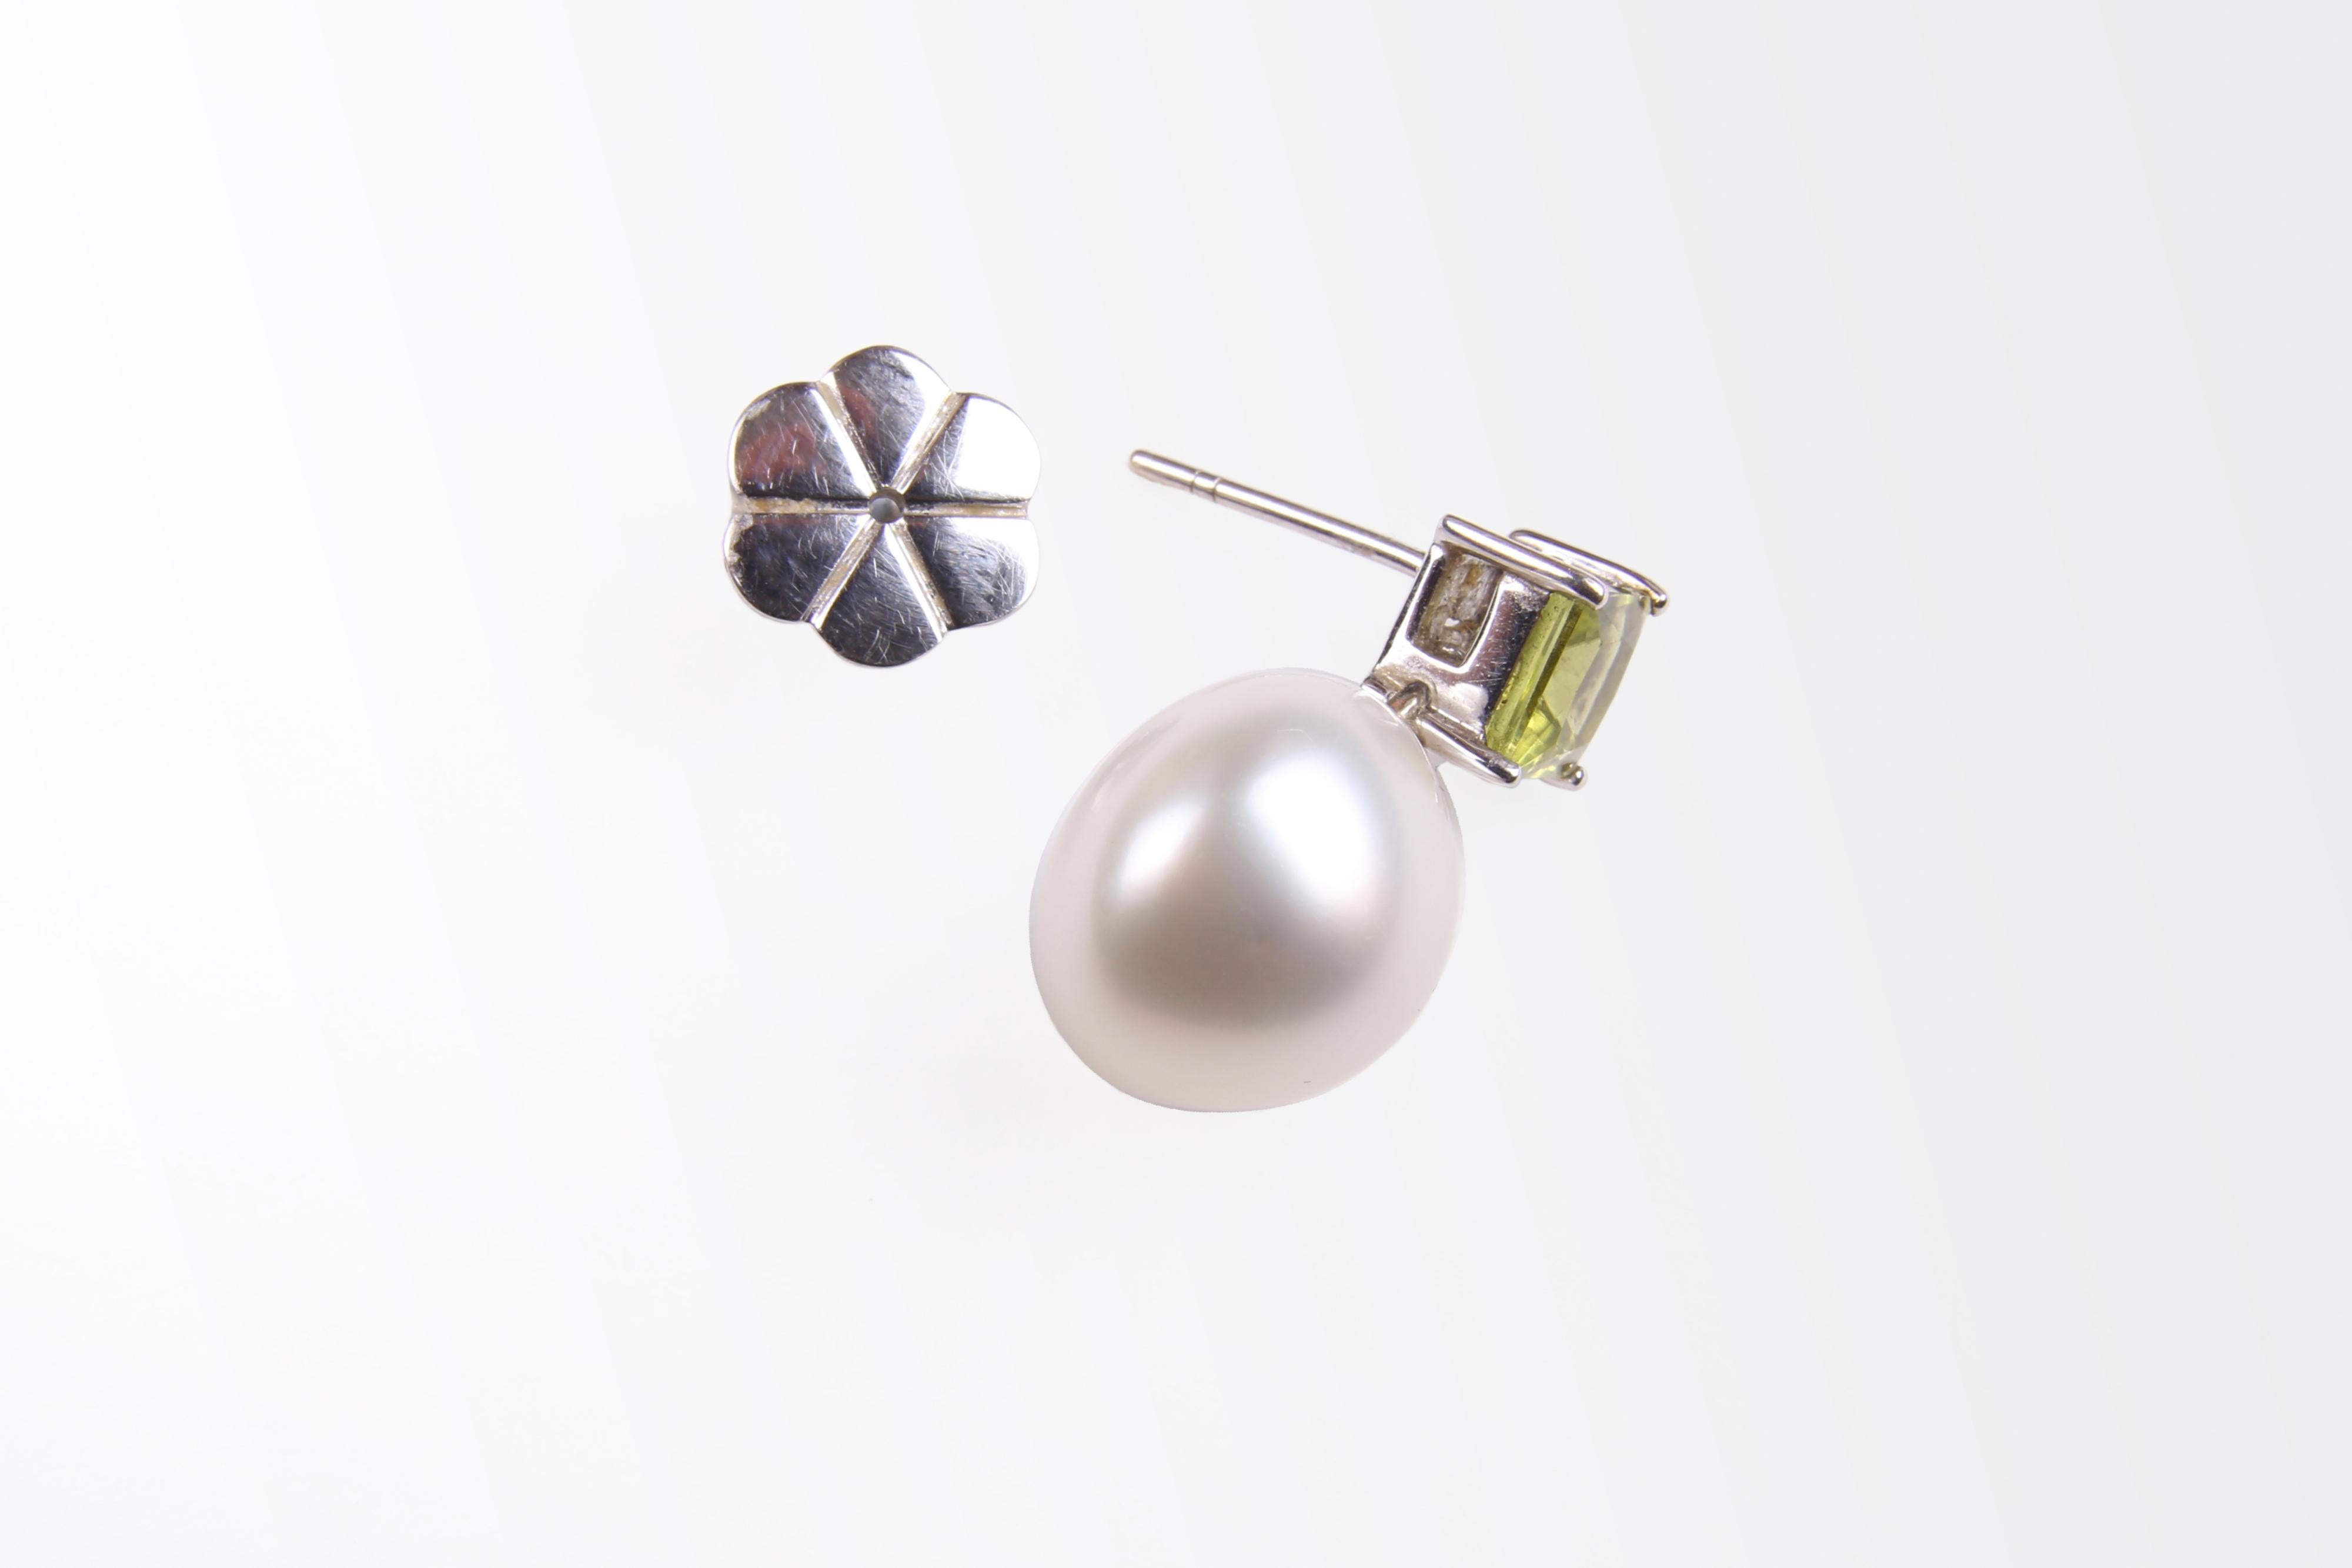 Autore White Gold, South Sea Pearl, Diamond, Peridot Pendant and Earrings Set 11